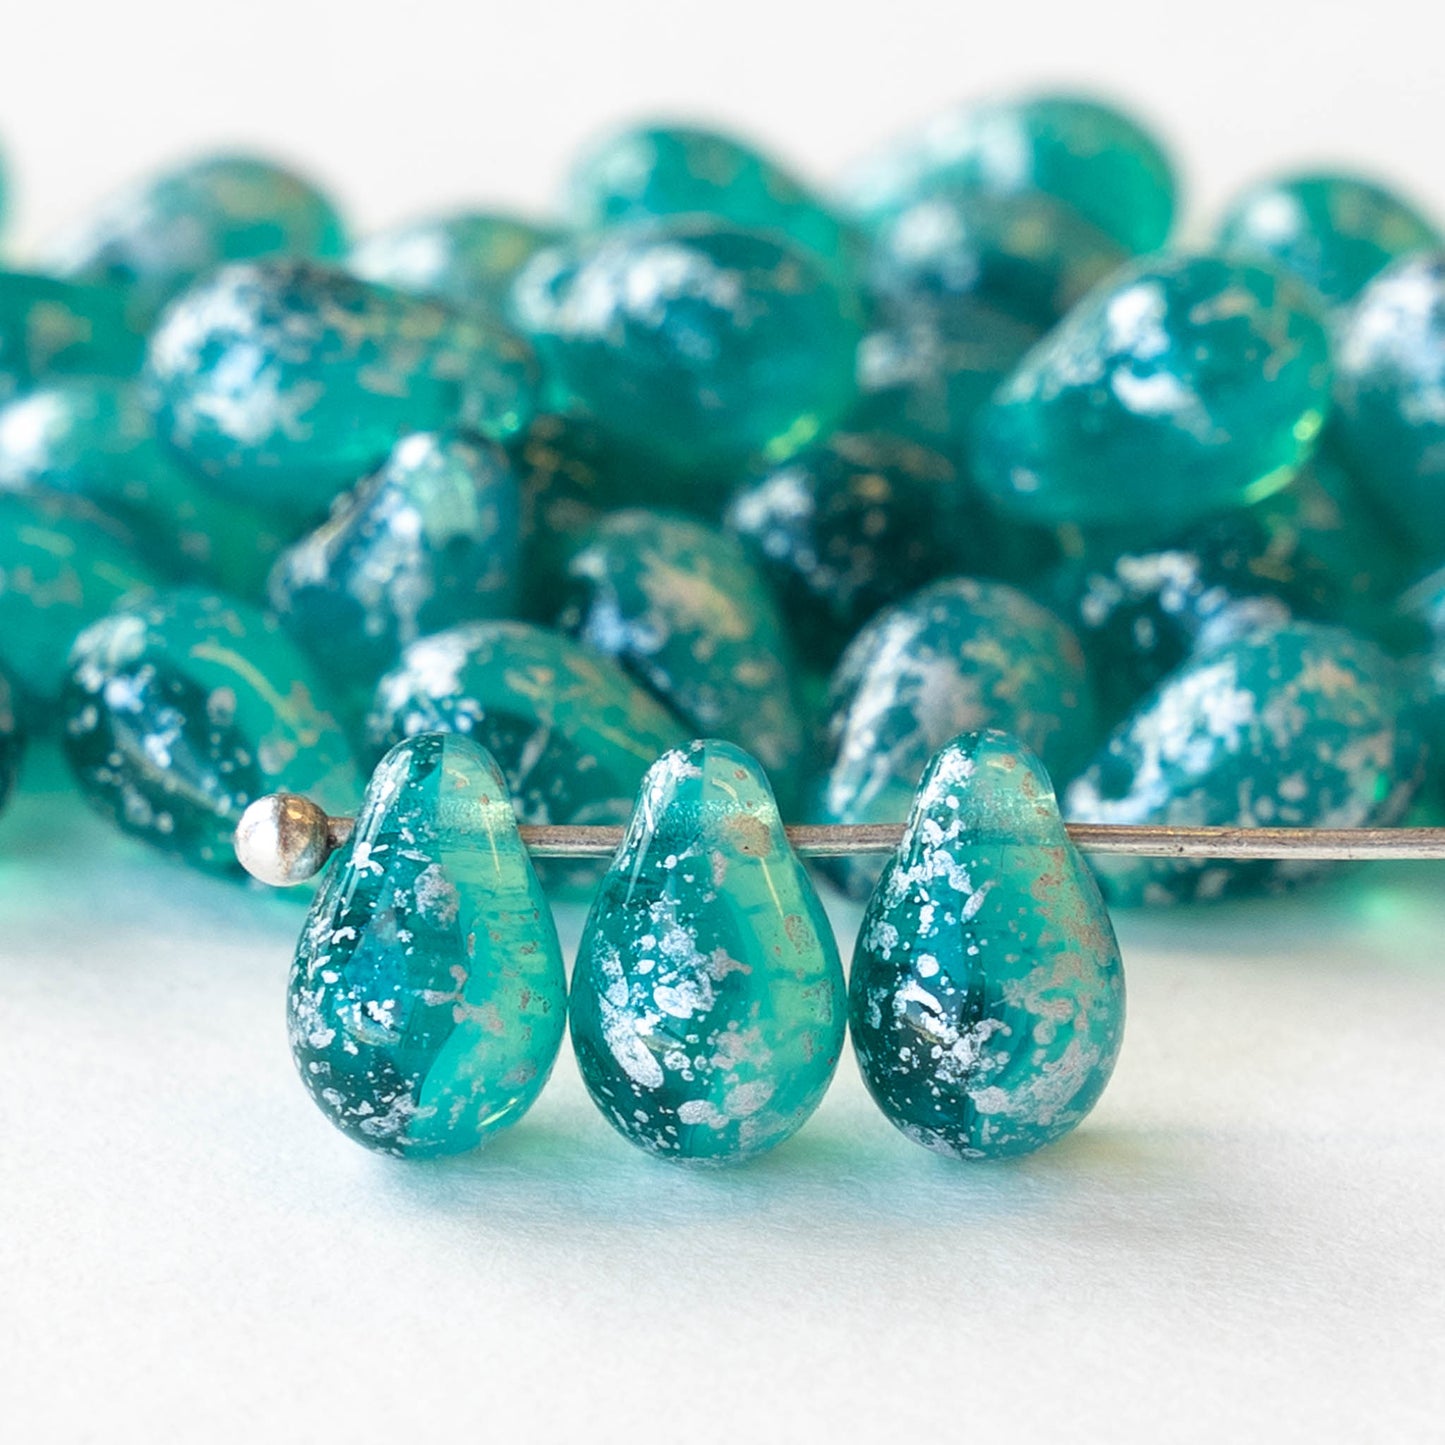 6x9mm Glass Teardrop Beads - Teal Aqua with Silver Dust - 50 Beads